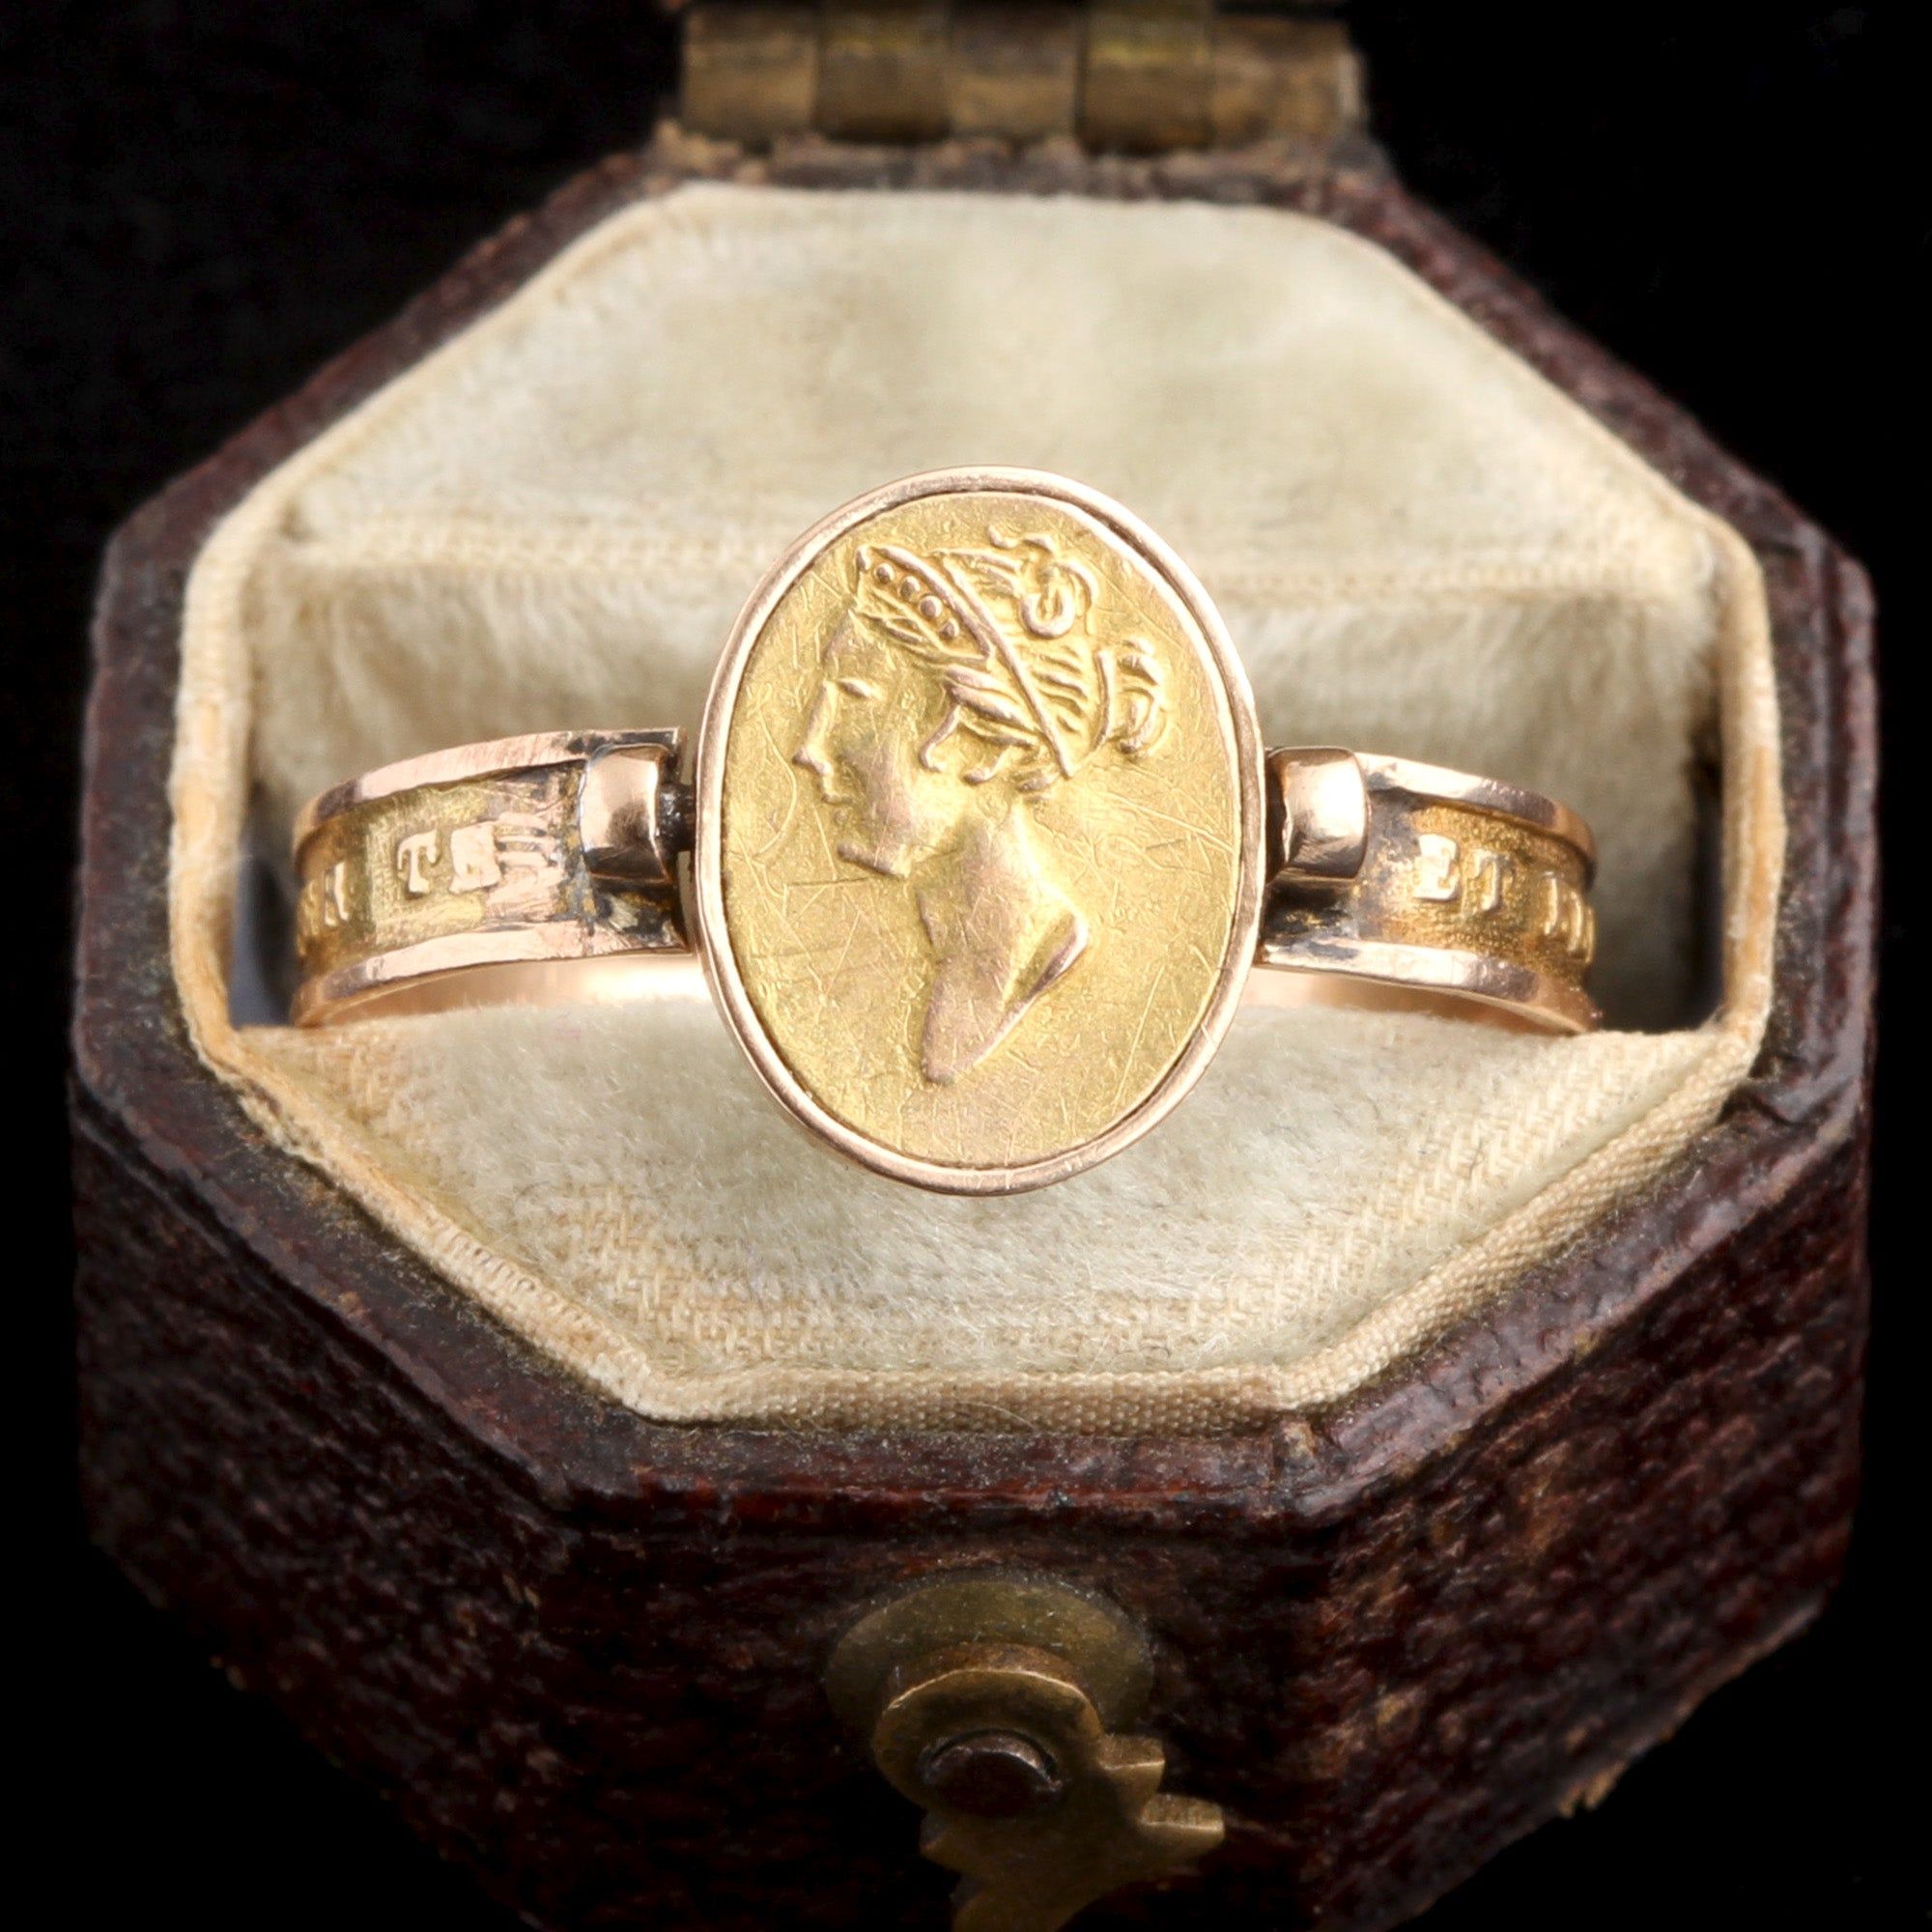 Princess Stephanie 1814 Commemorative Swivel Ring